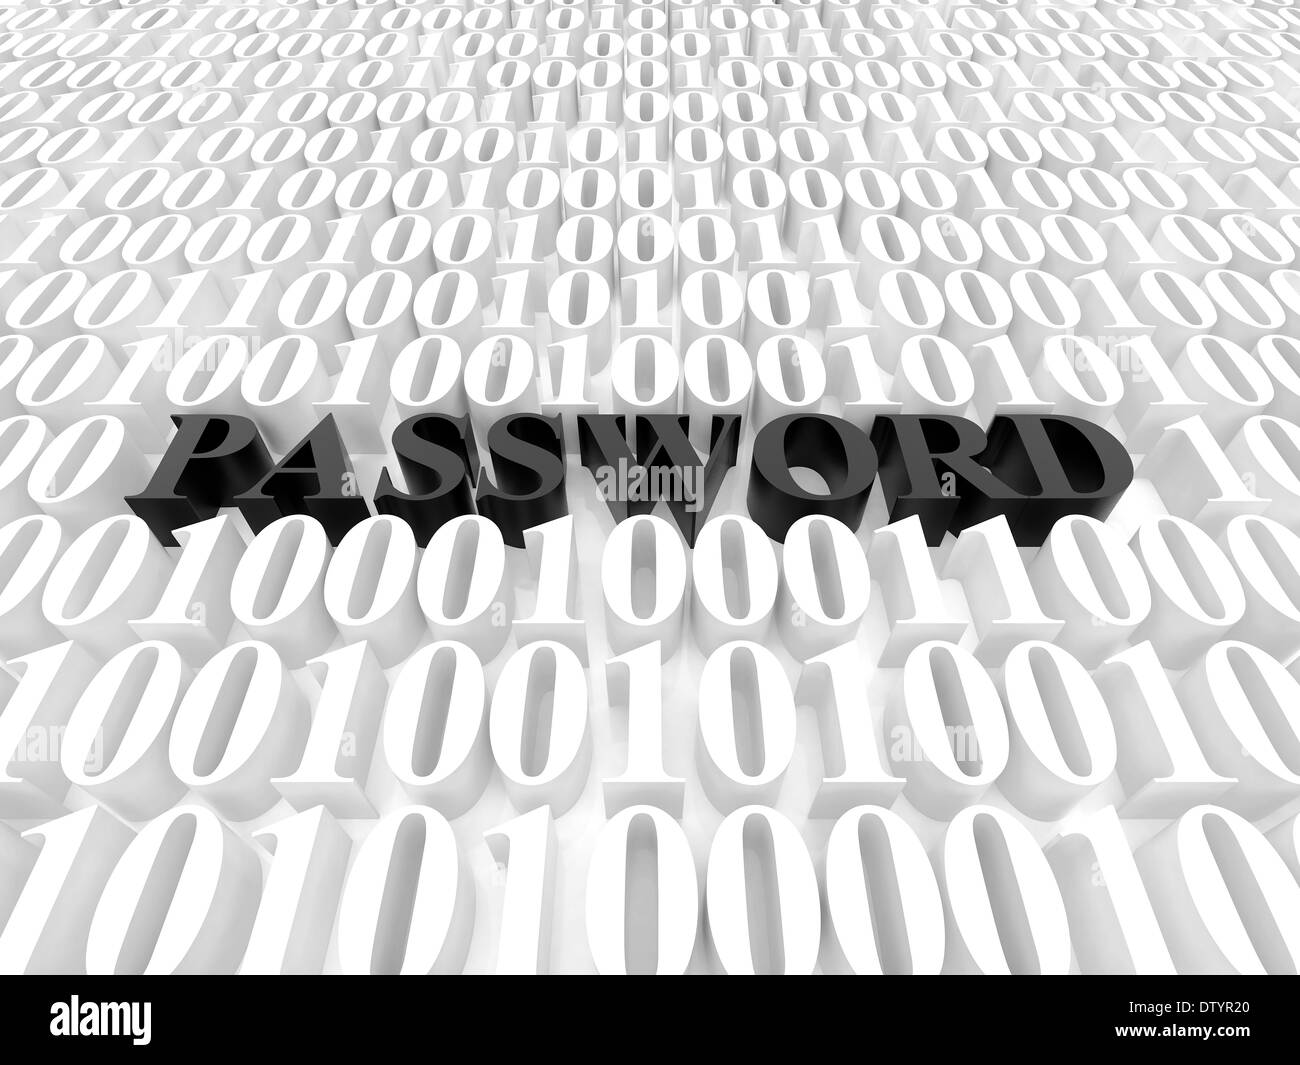 High resolution image password. 3d rendered illustration. Symbol password. Stock Photo